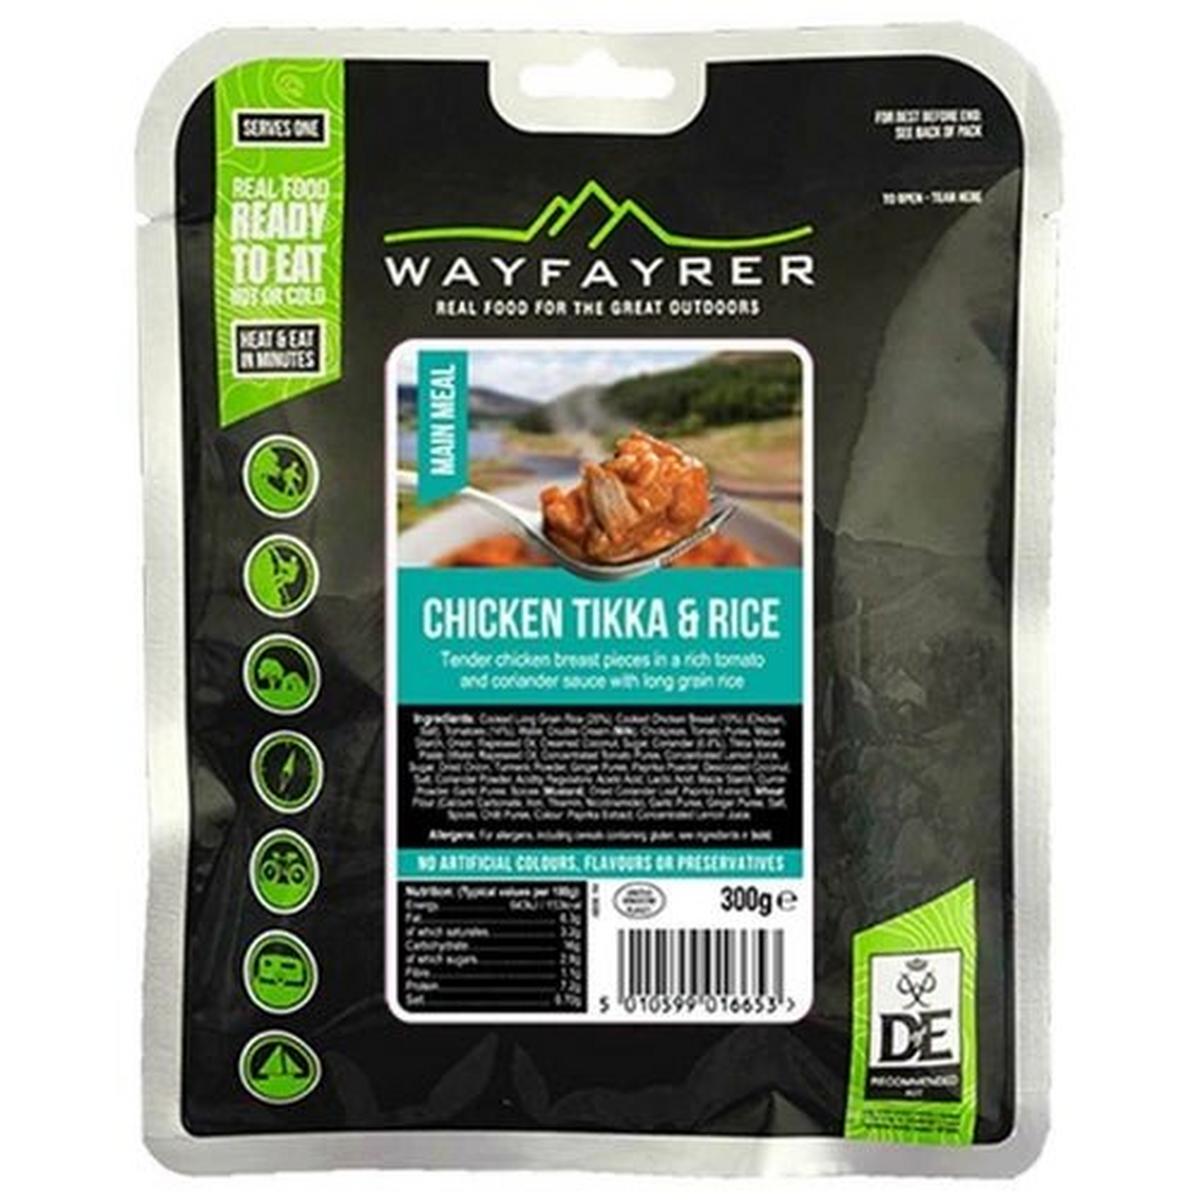 Wayfayrer Chicken Tikka & Rice